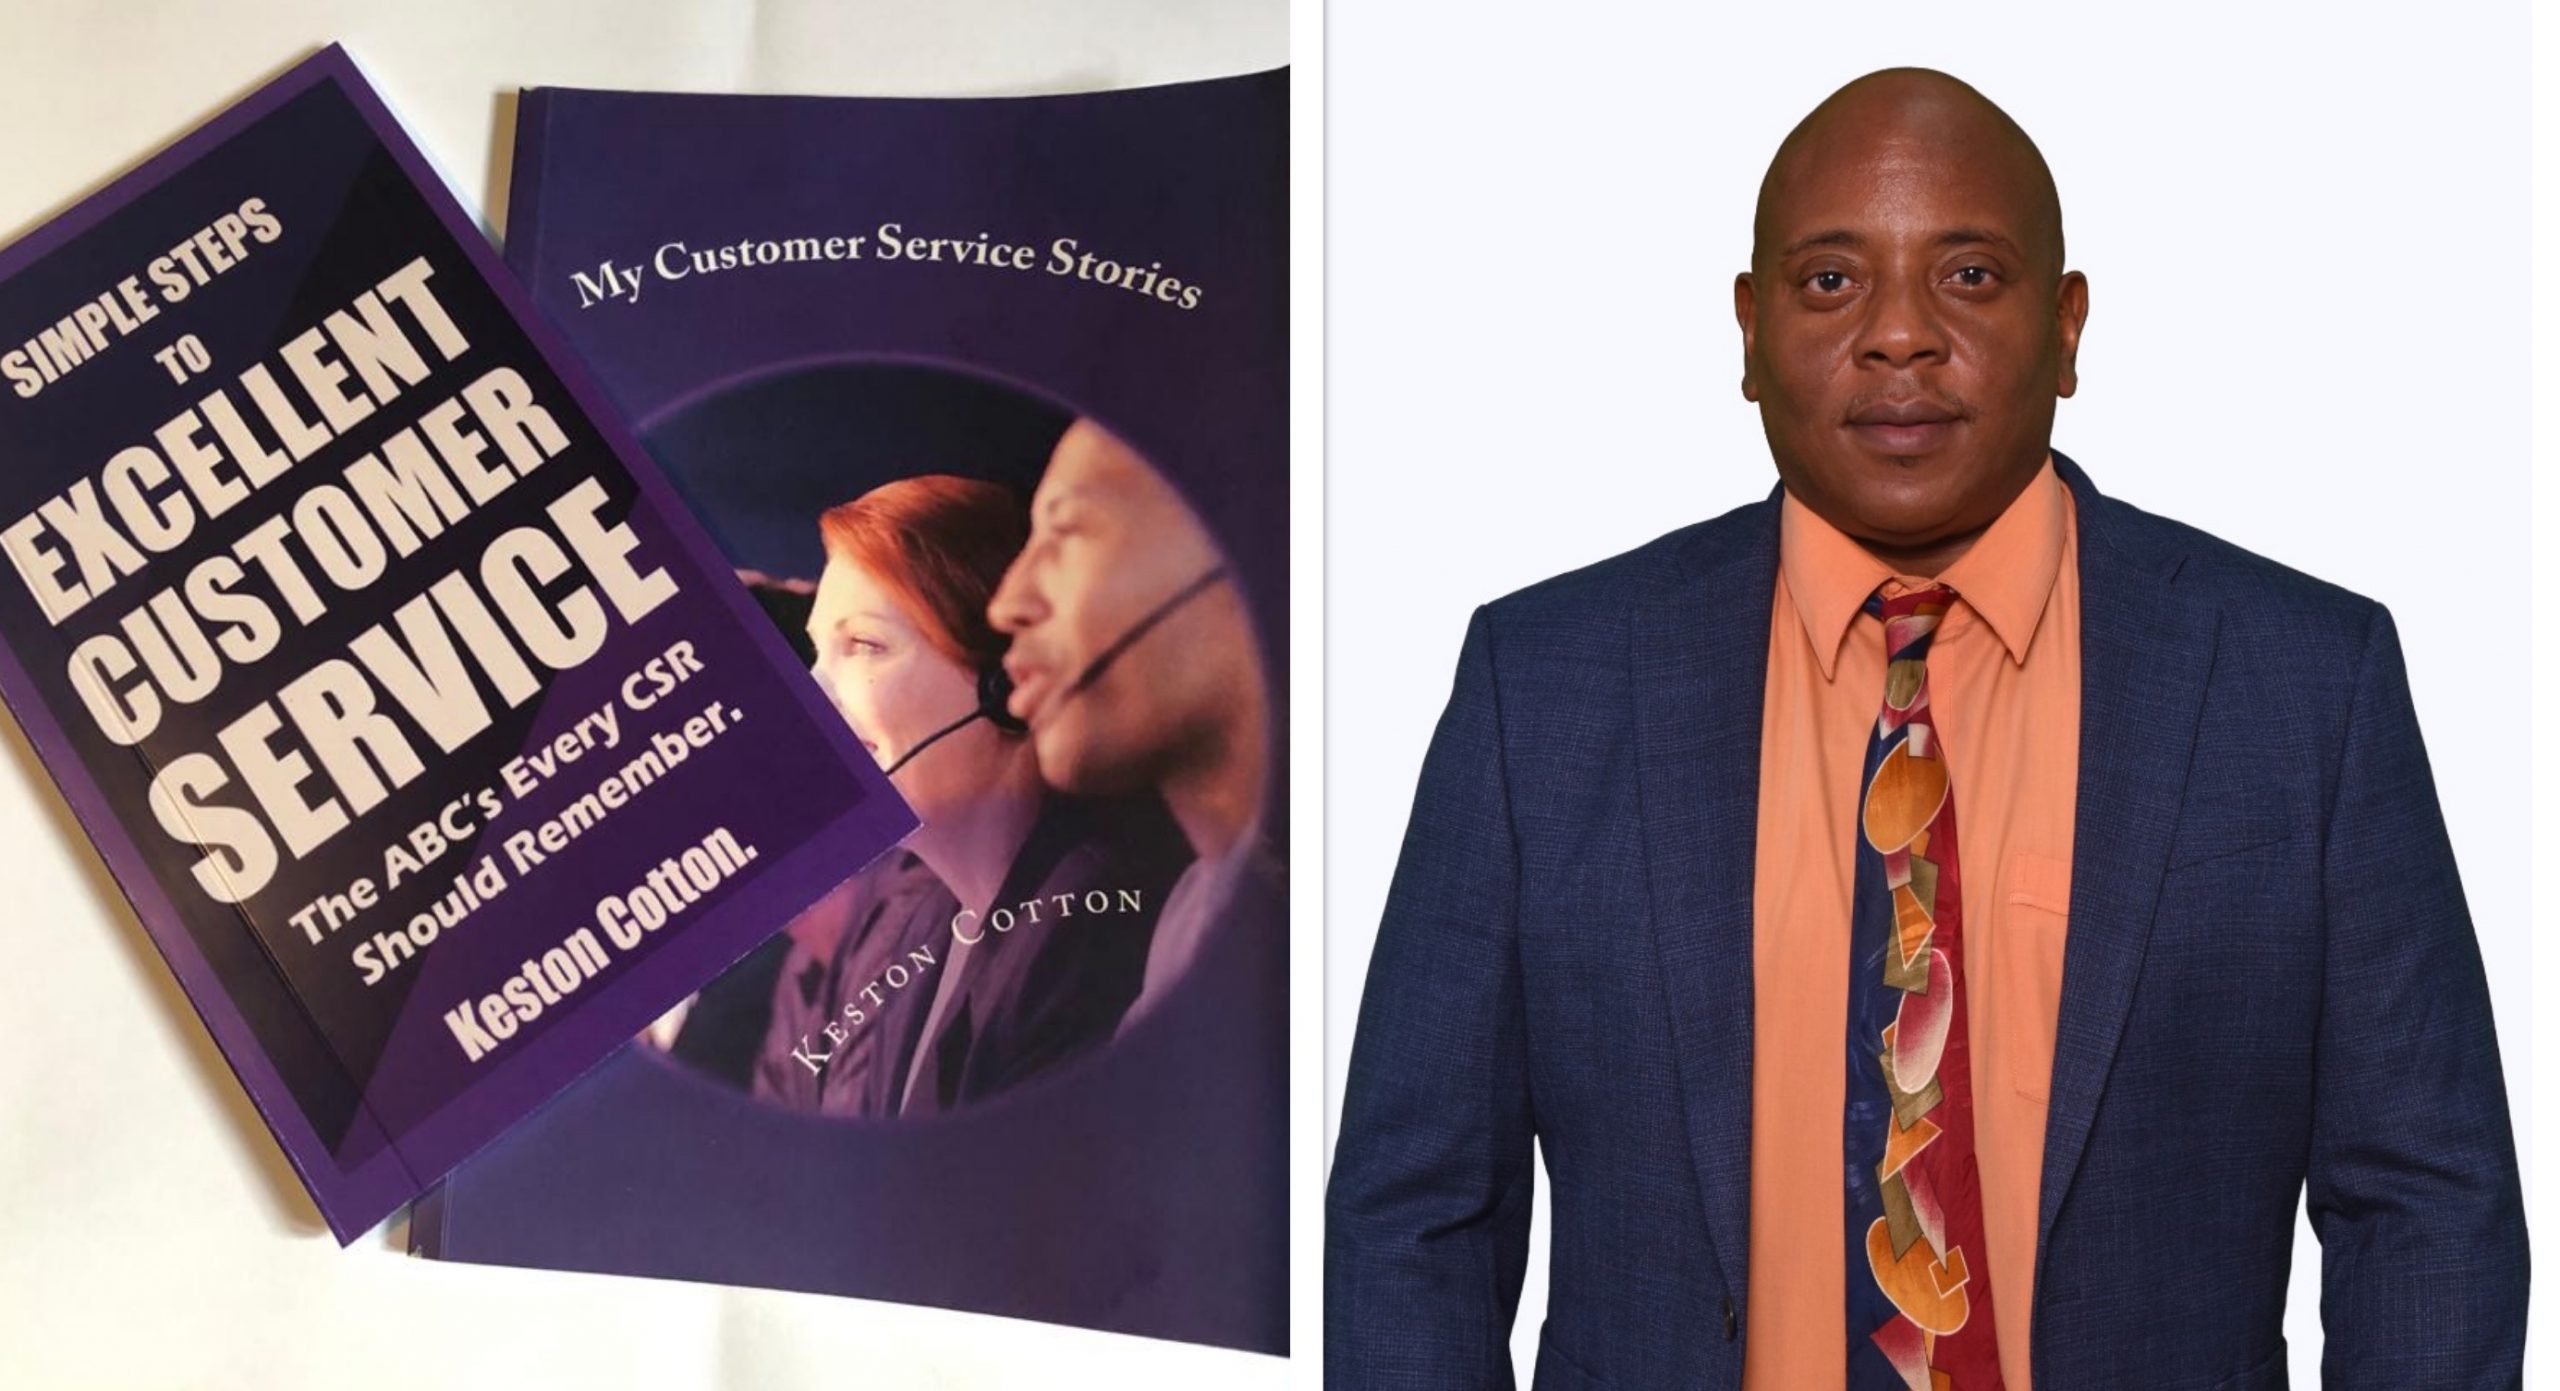 Customer service in T&T sucks, but CS advisor Keston Cotton wants to help change that